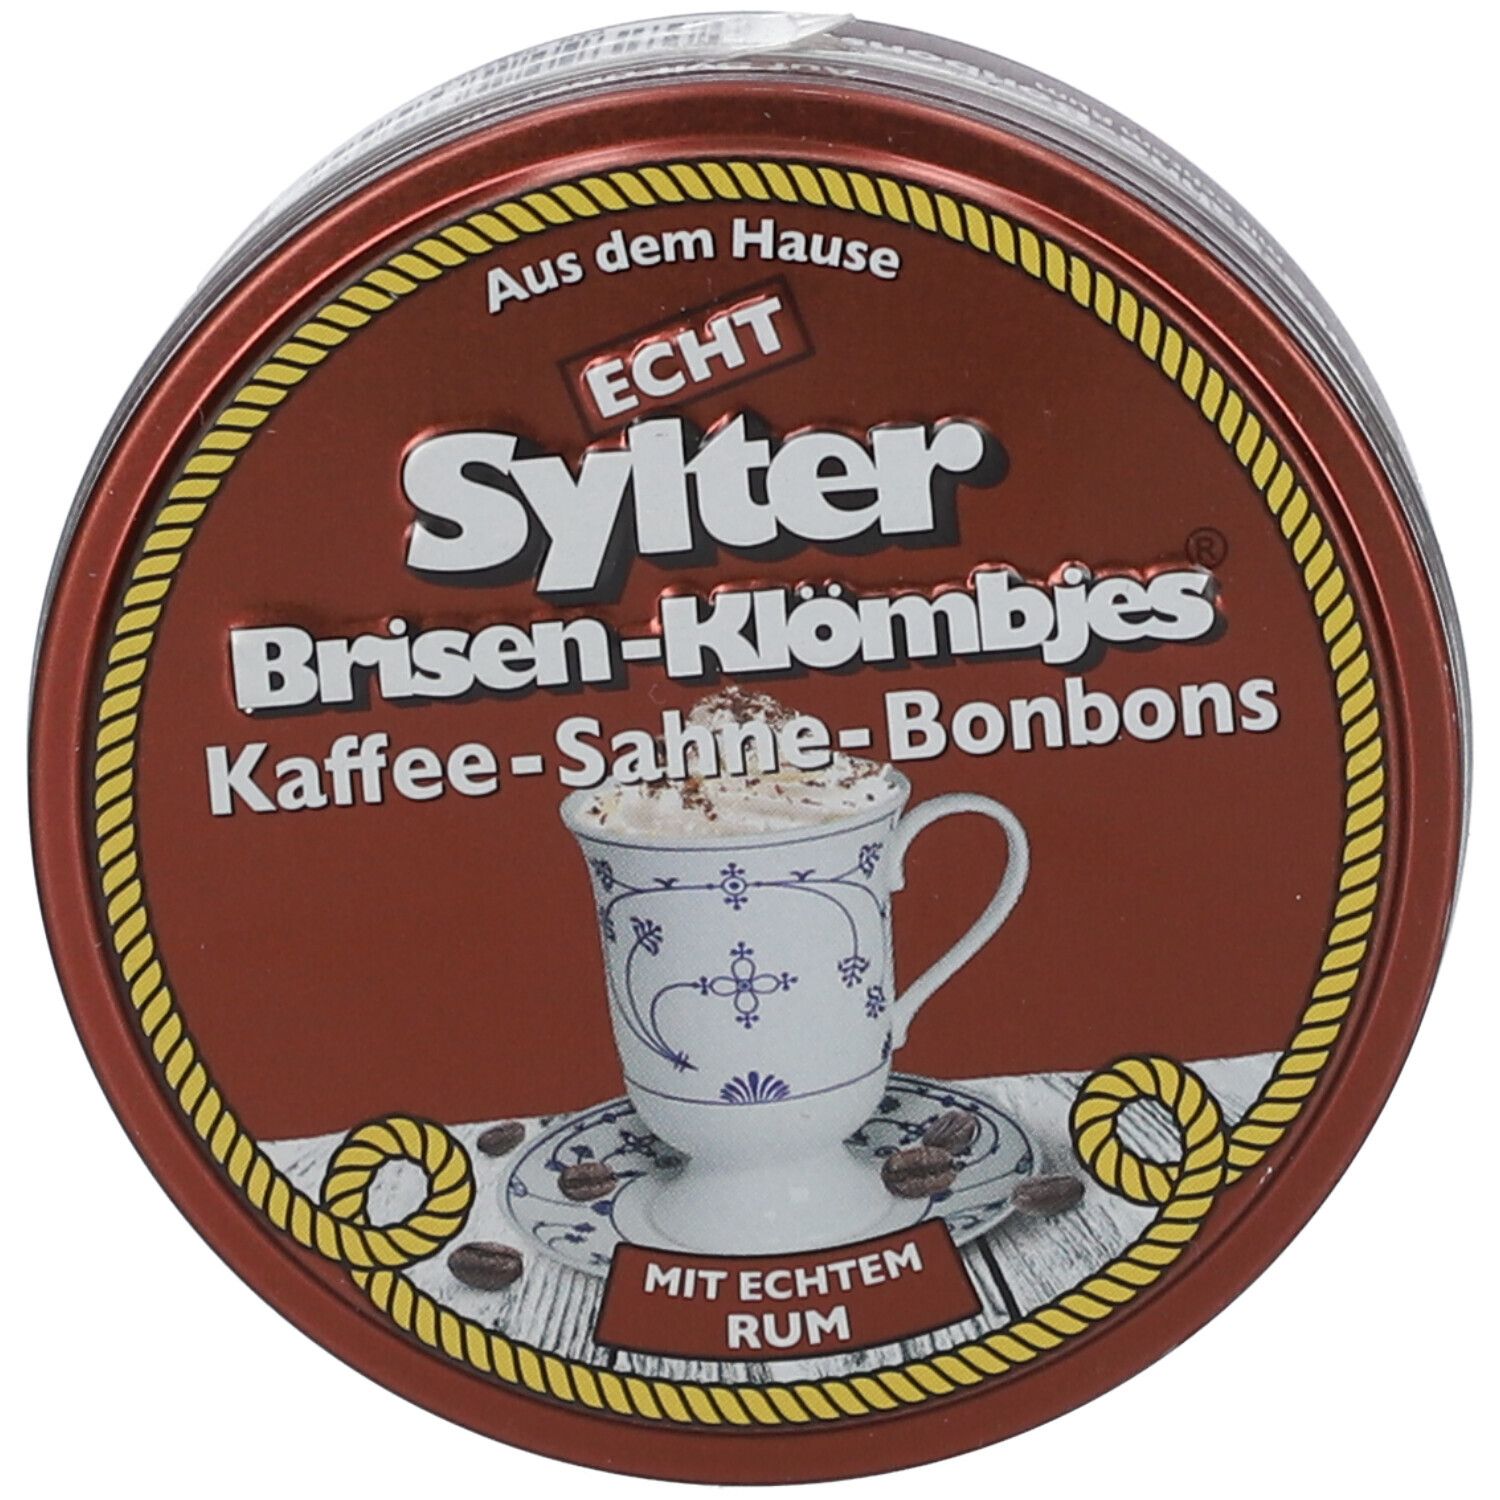 Echt Sylter Brisen Kloembjes Kaffee/Sahne